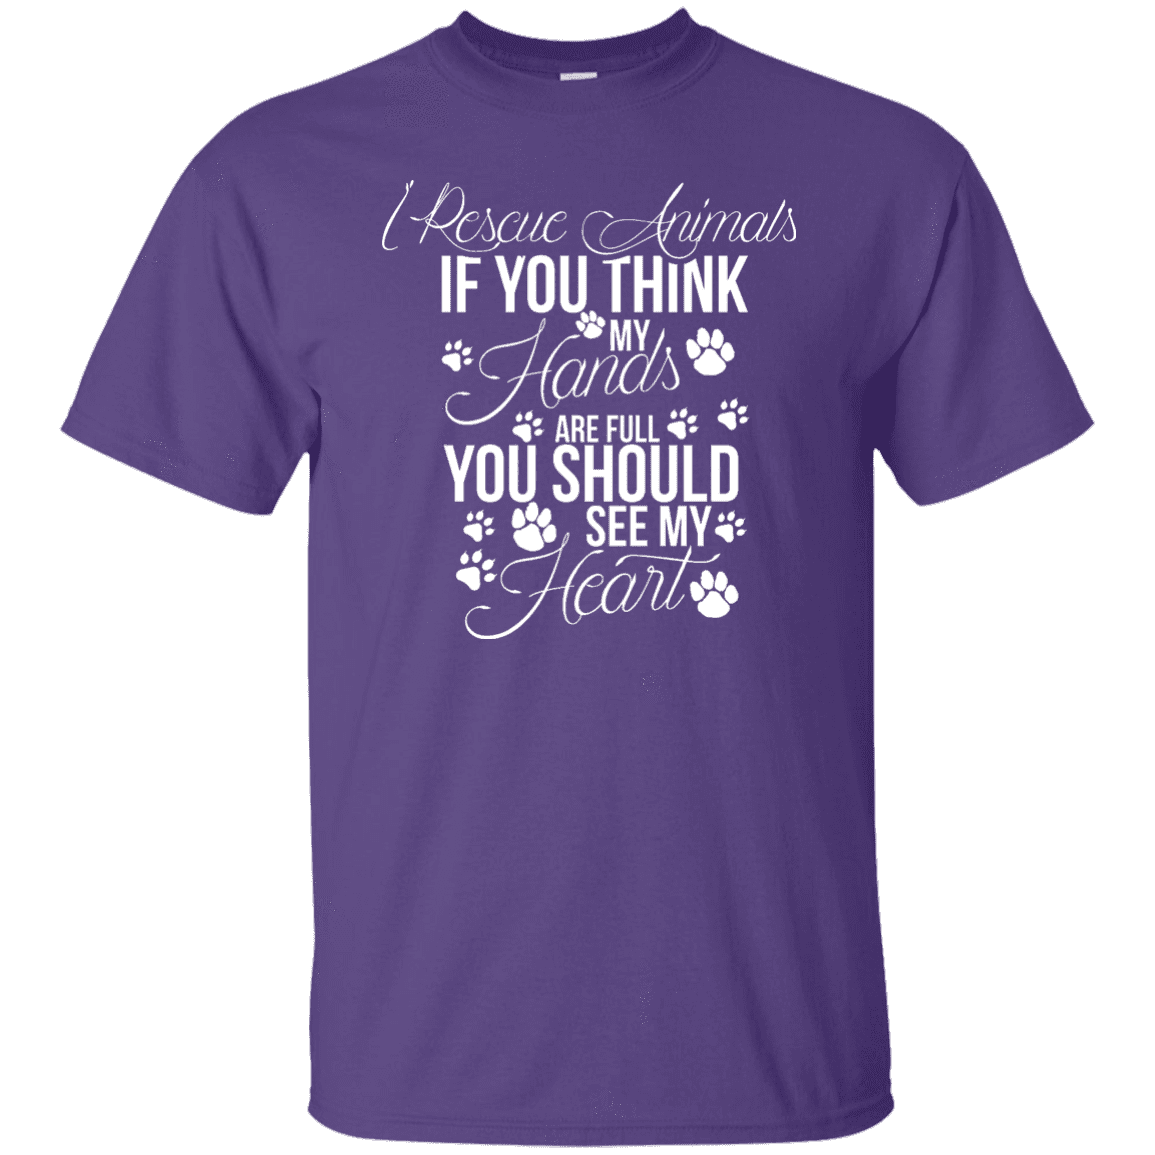 I Rescue Animals - T Shirt.